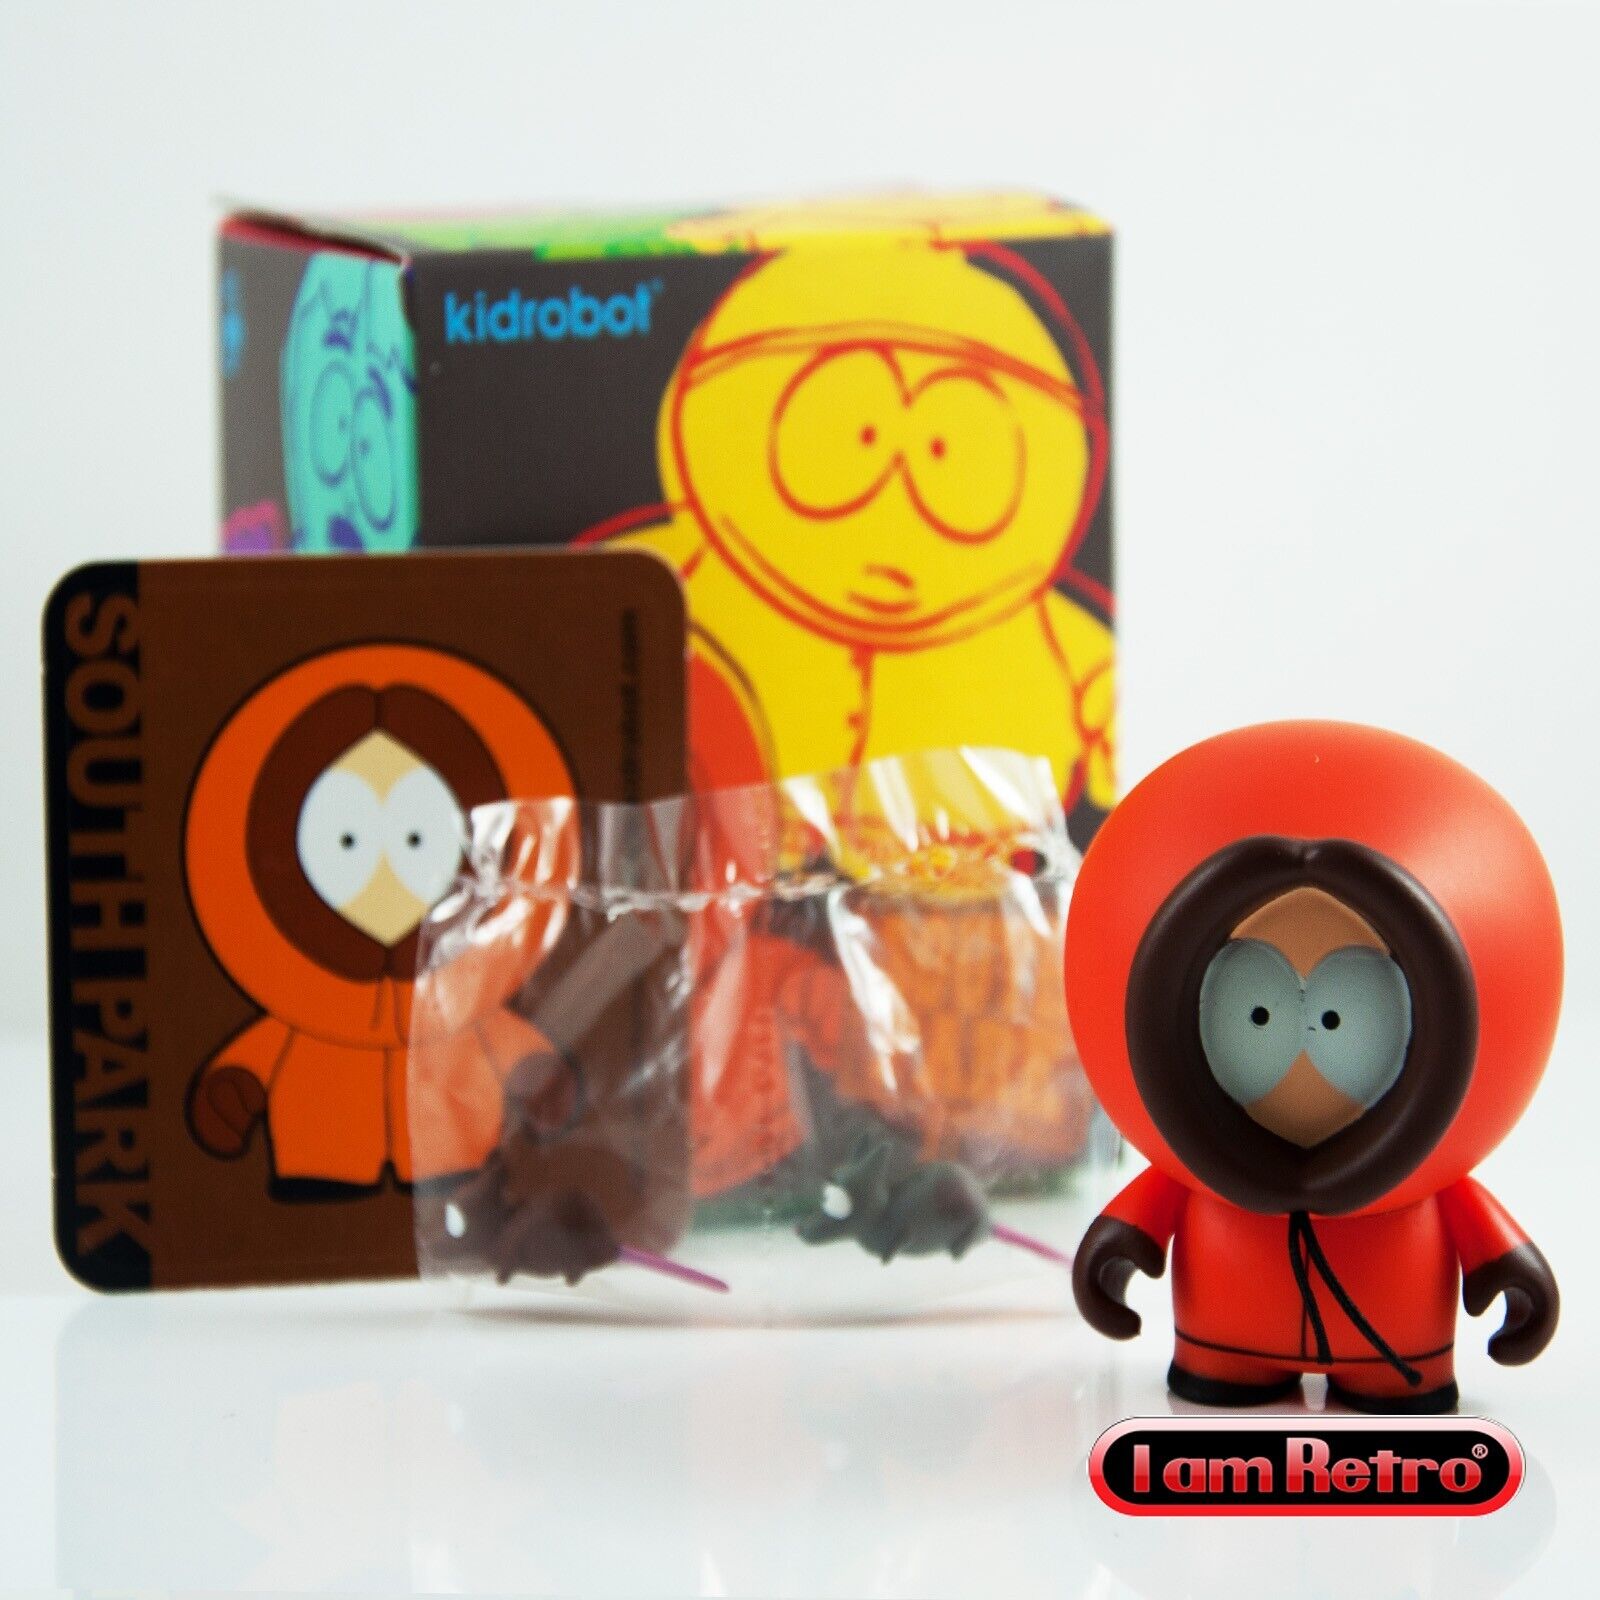 Kidrobot South Park Mini Series 1 Kenny Vinyl Figure